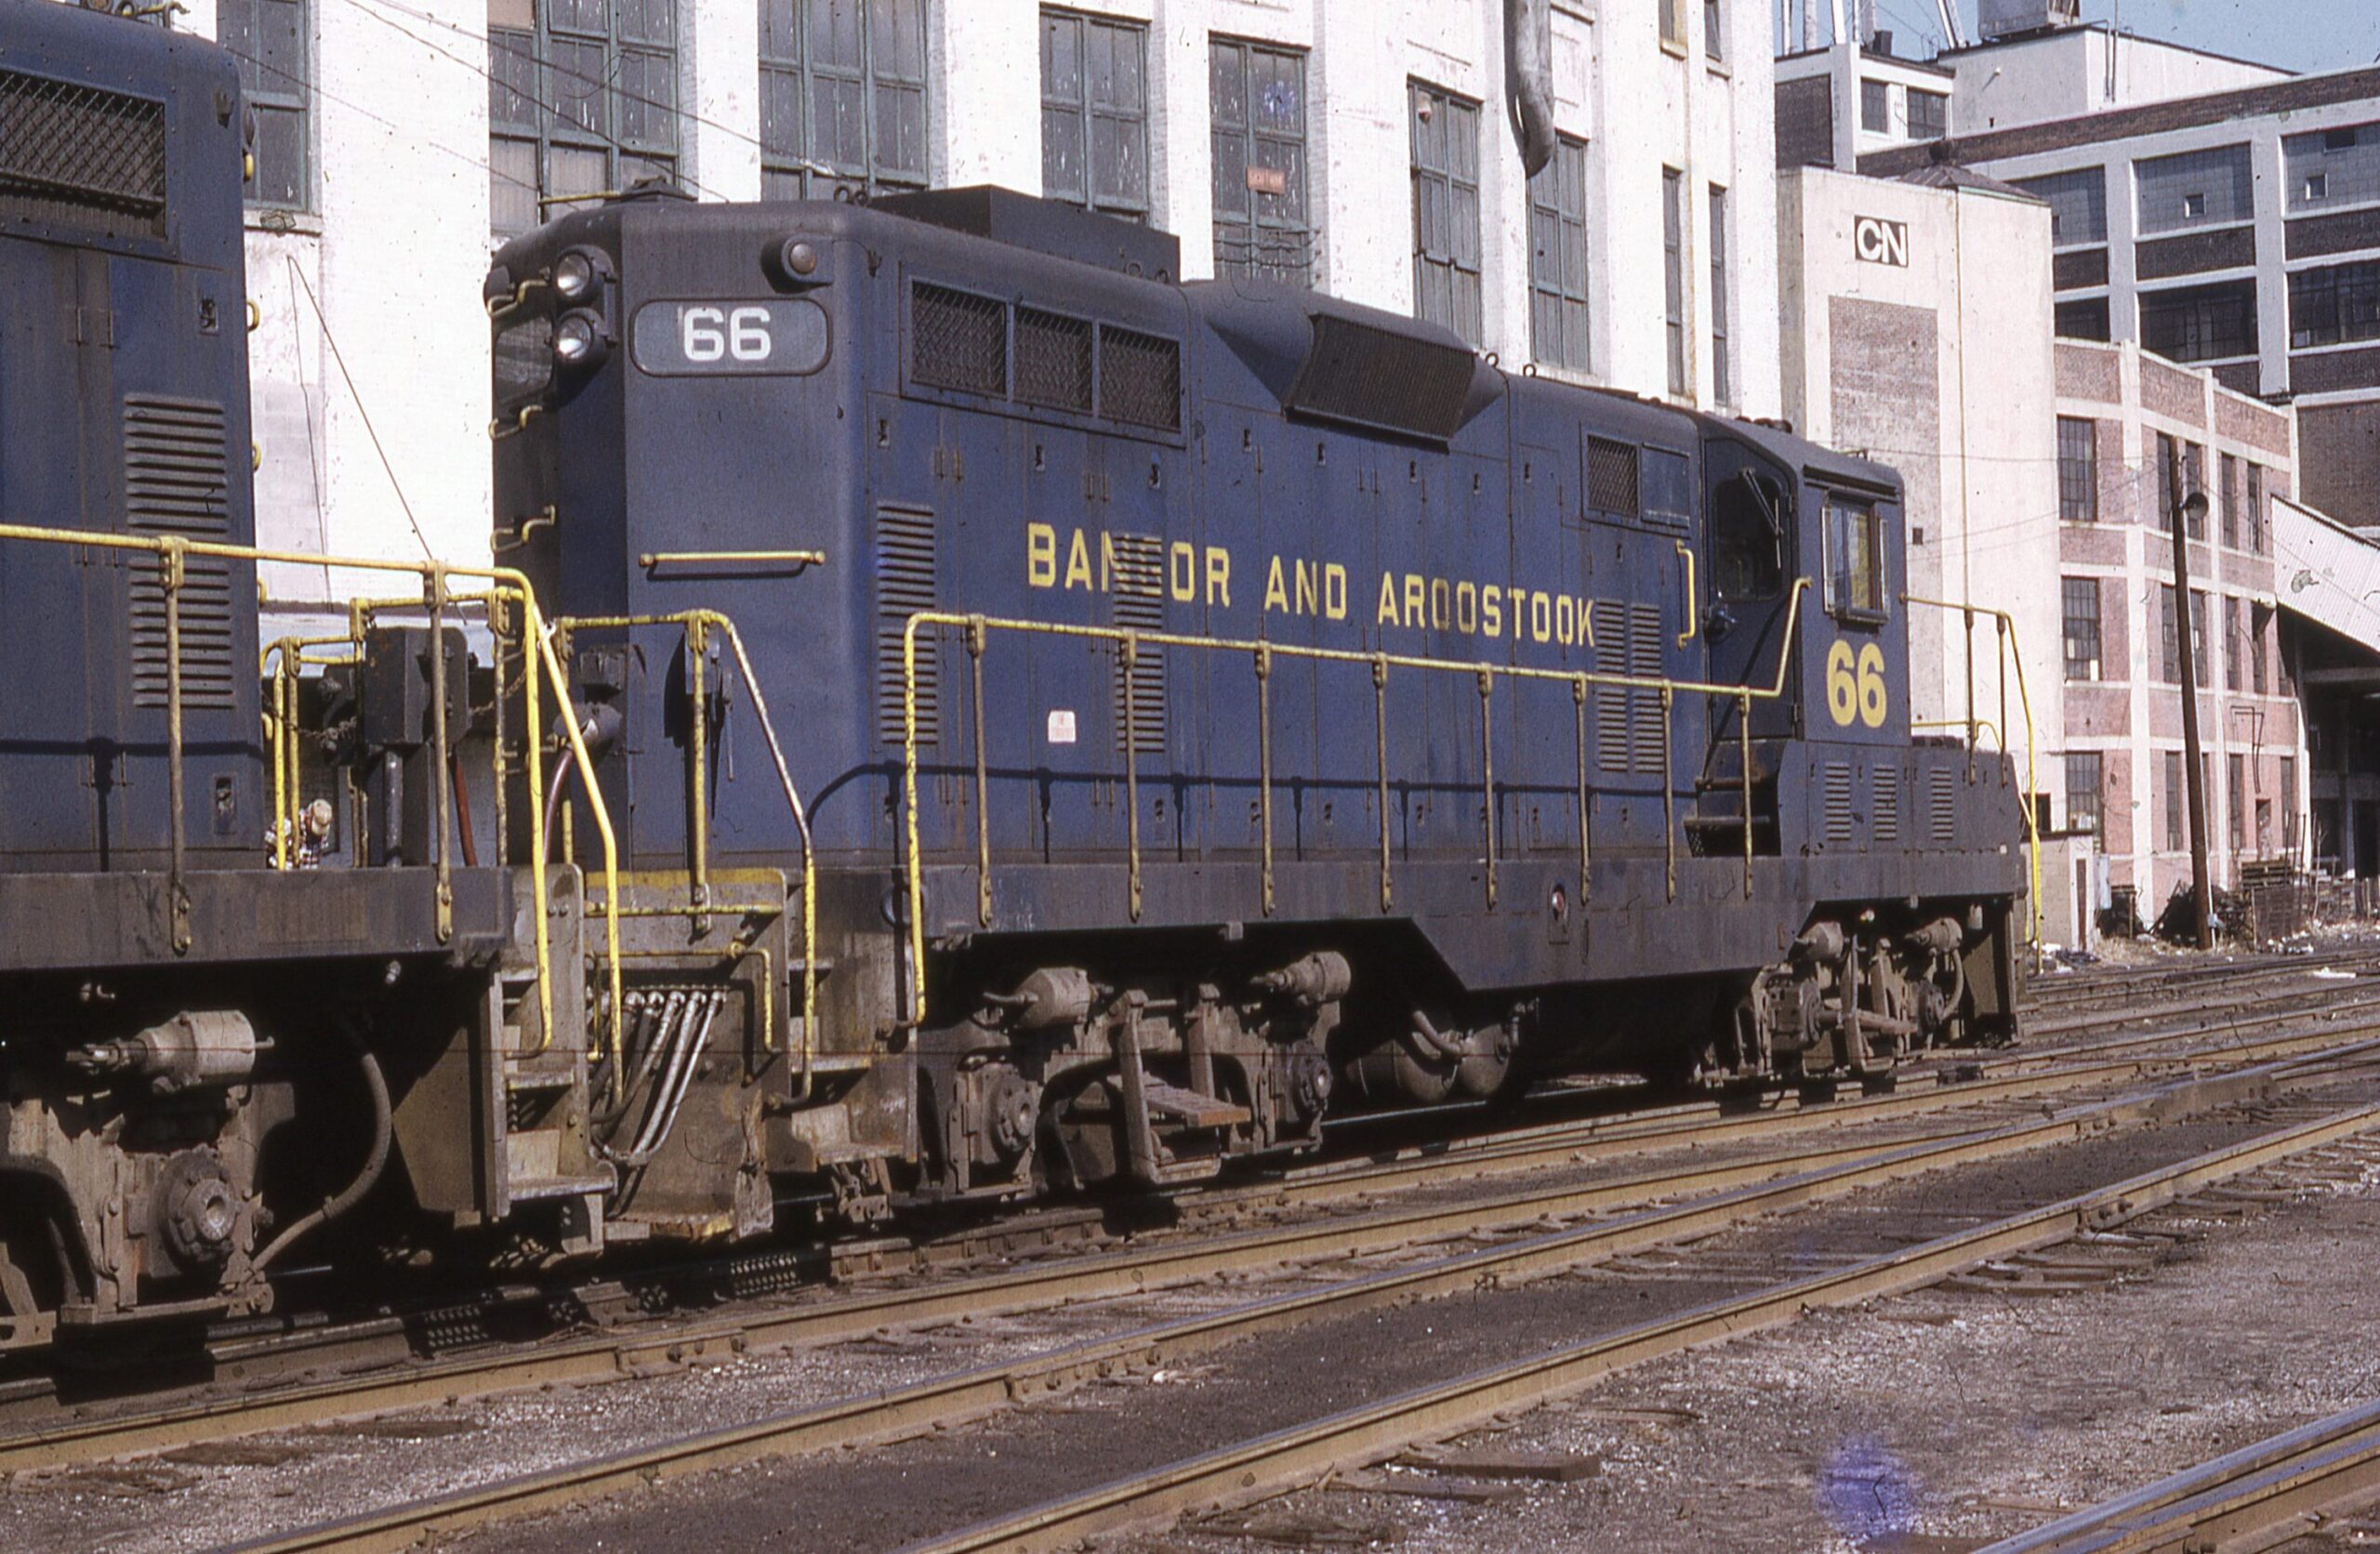 Bangor and Aroostook | Long Island City, New York | GP7 66 | February 10, 1975 | William Rosenberg photo